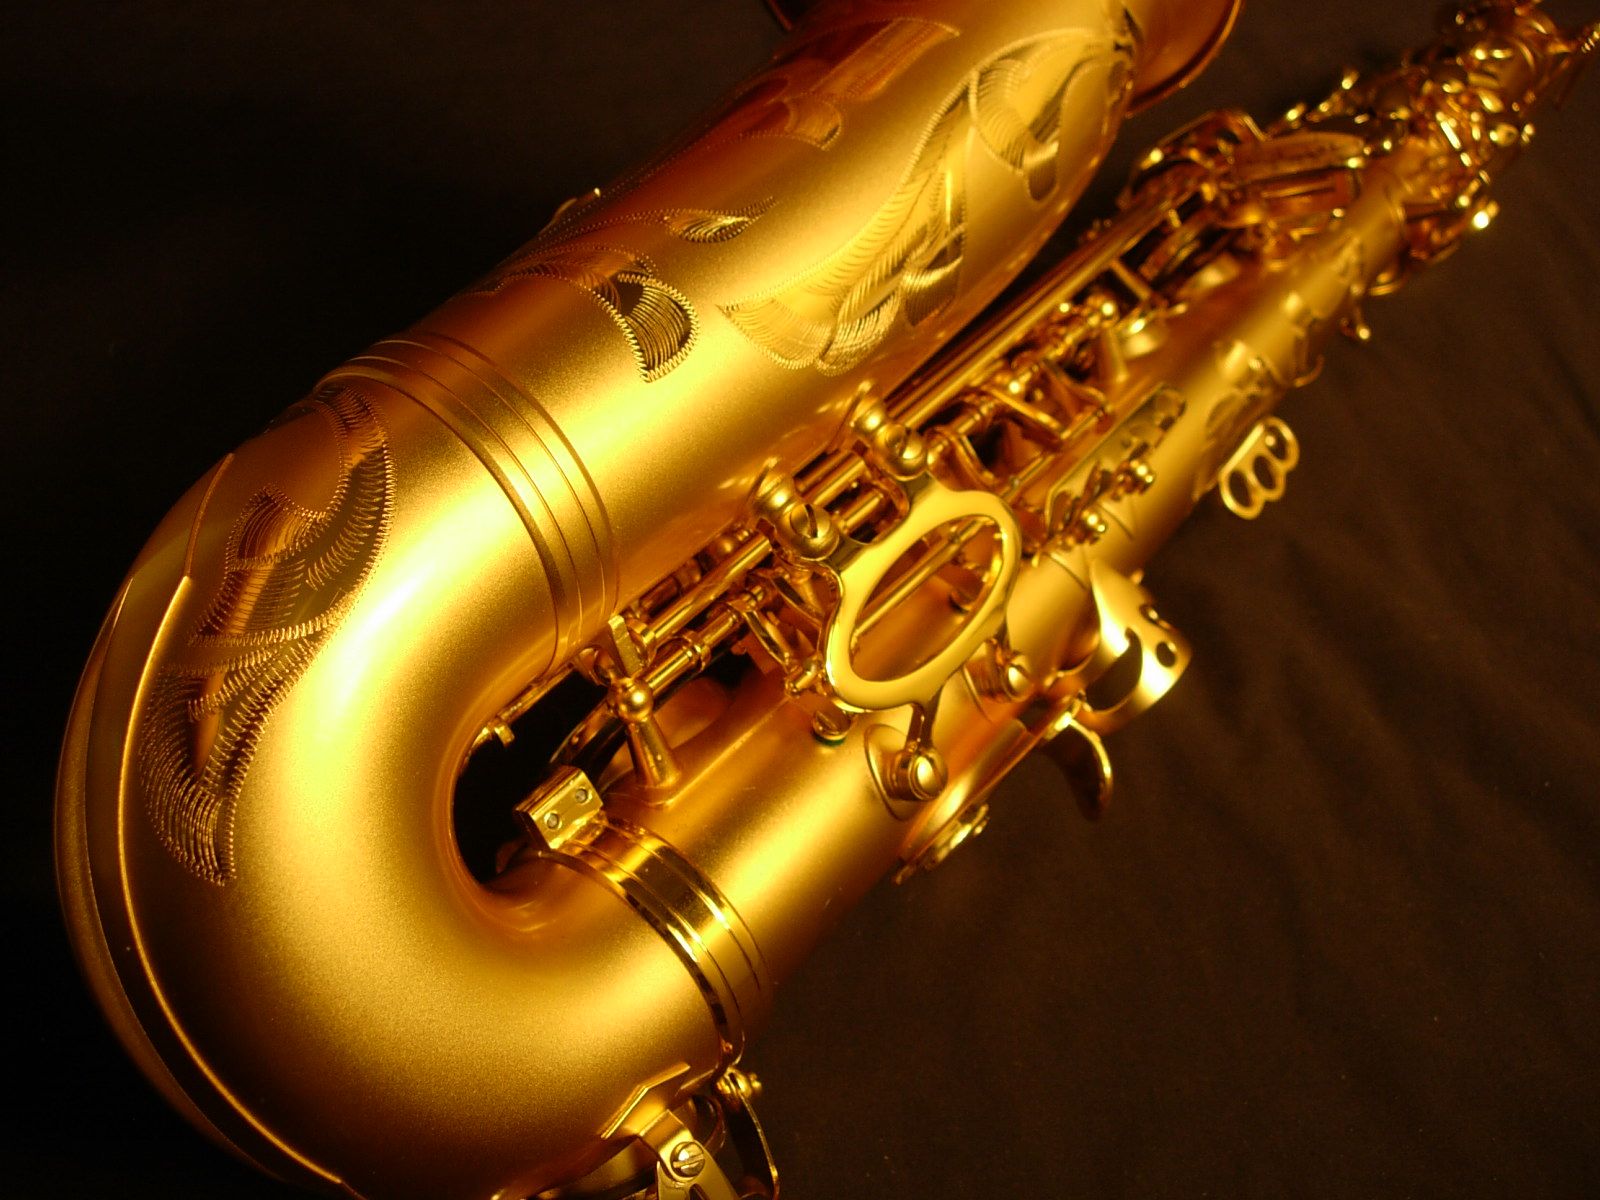 Fondos de saxofón - 44N77MN - 4USkY